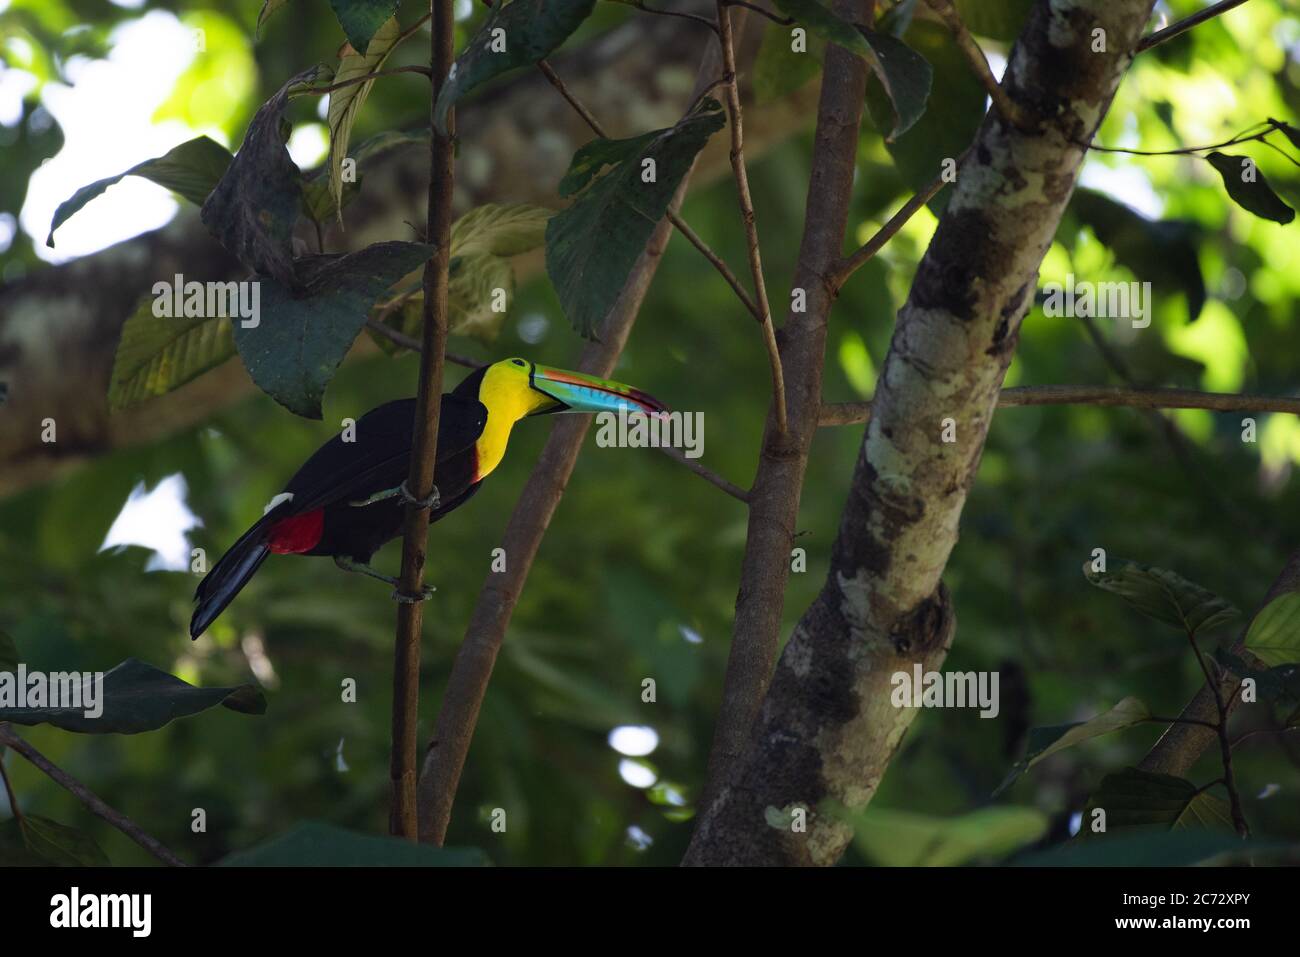 Keel-billed toucan, Ramphastos sulfuratus, sulfur-breasted toucan, rainbow-billed toucan, beautiful colorful bird sittin on tree branch eating fruit Stock Photo